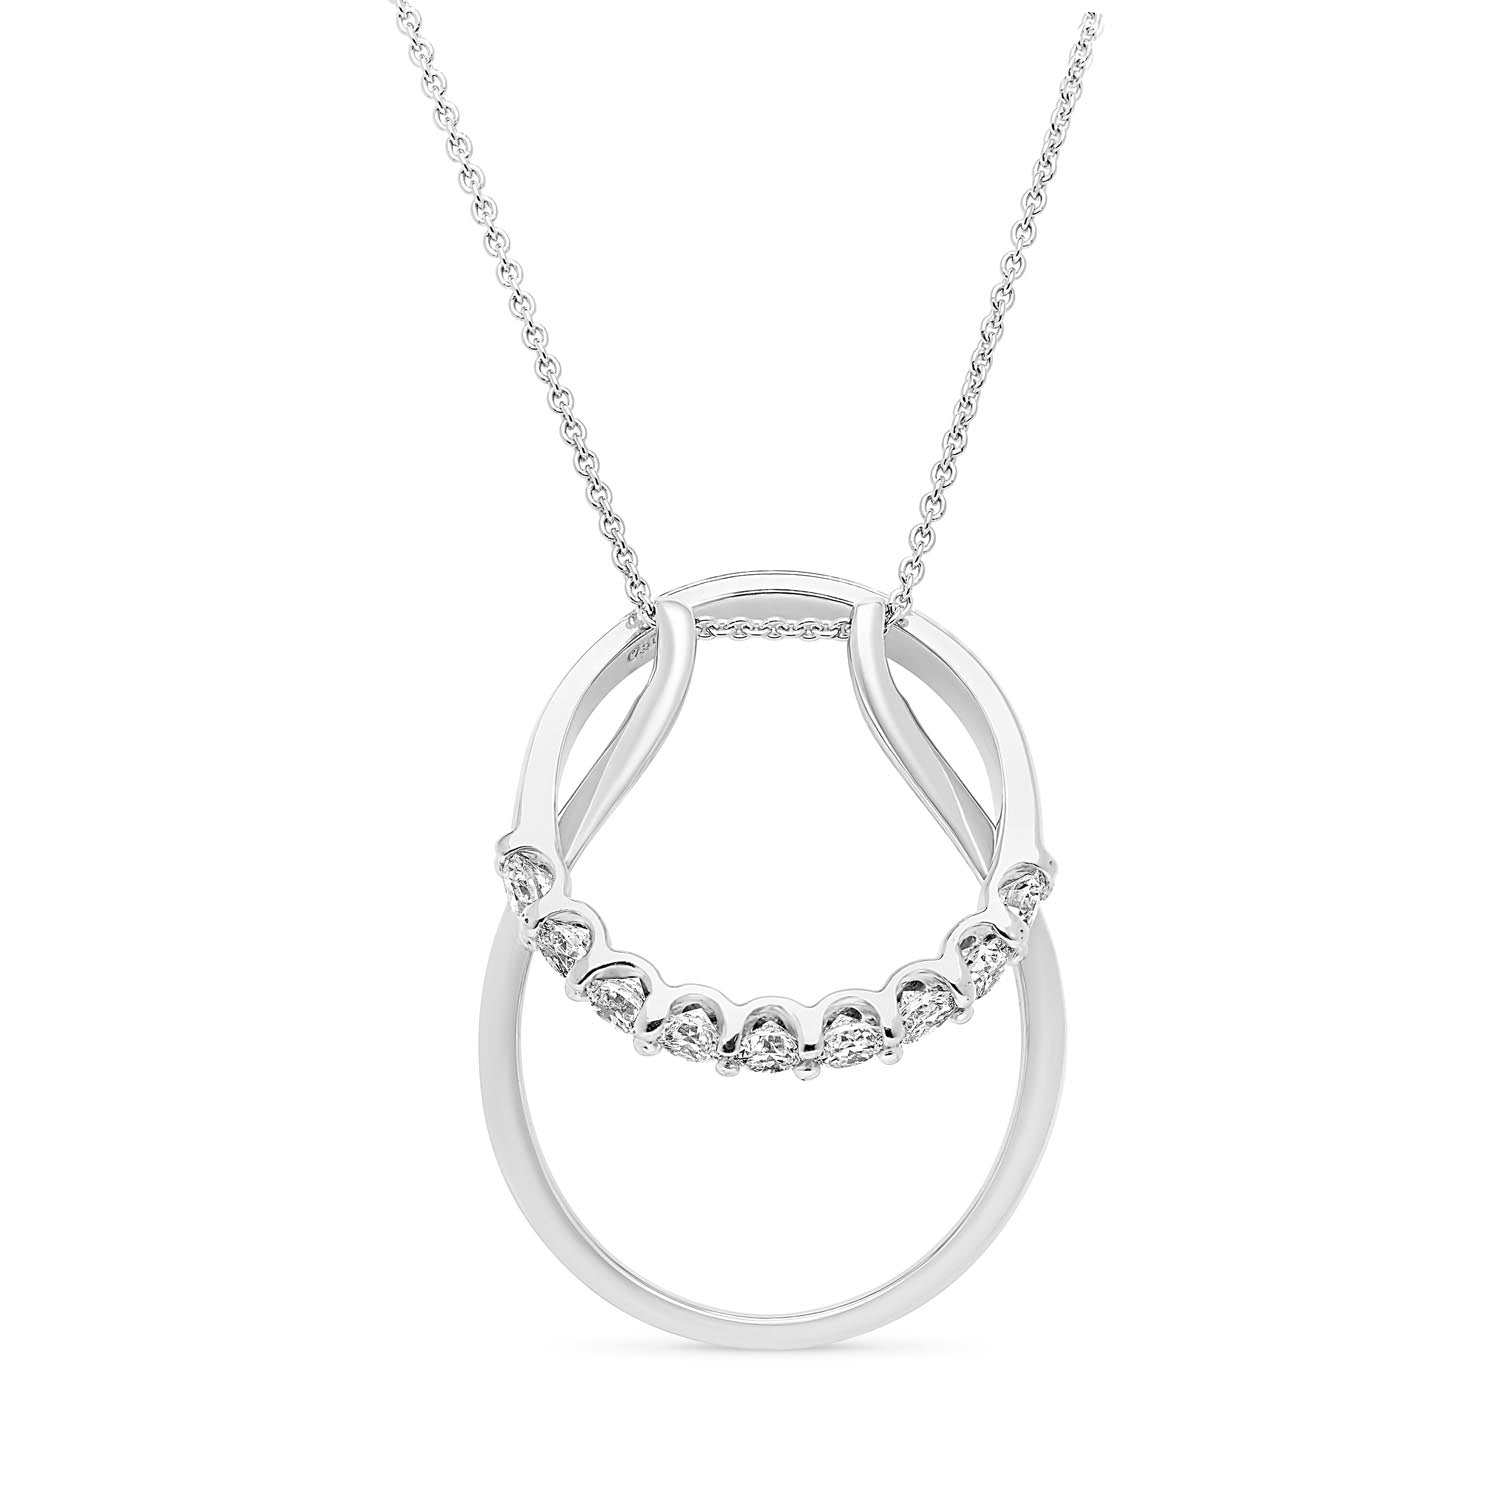 Ring Holder Necklace - White Gold